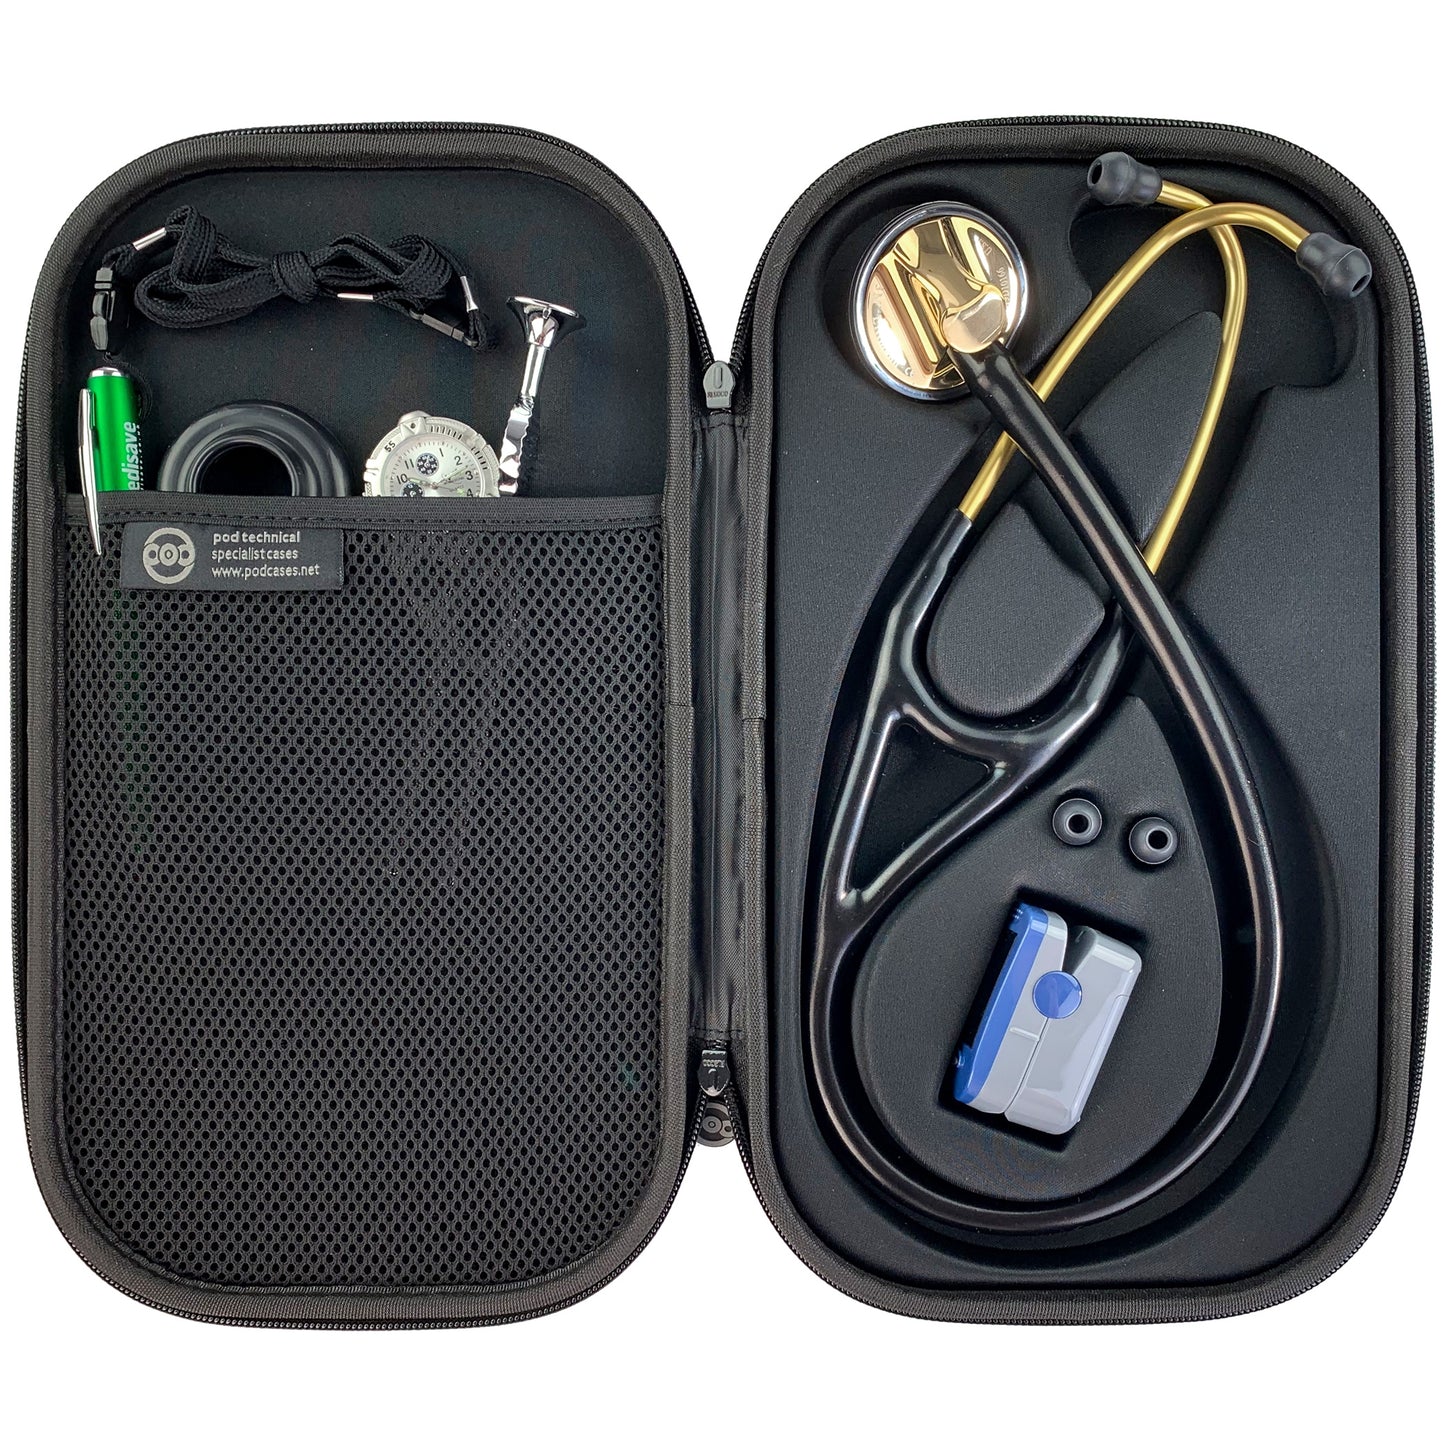 Pod Technical Cardiopod II Stethoscope Case for all Littmann Stethoscopes - Carbon